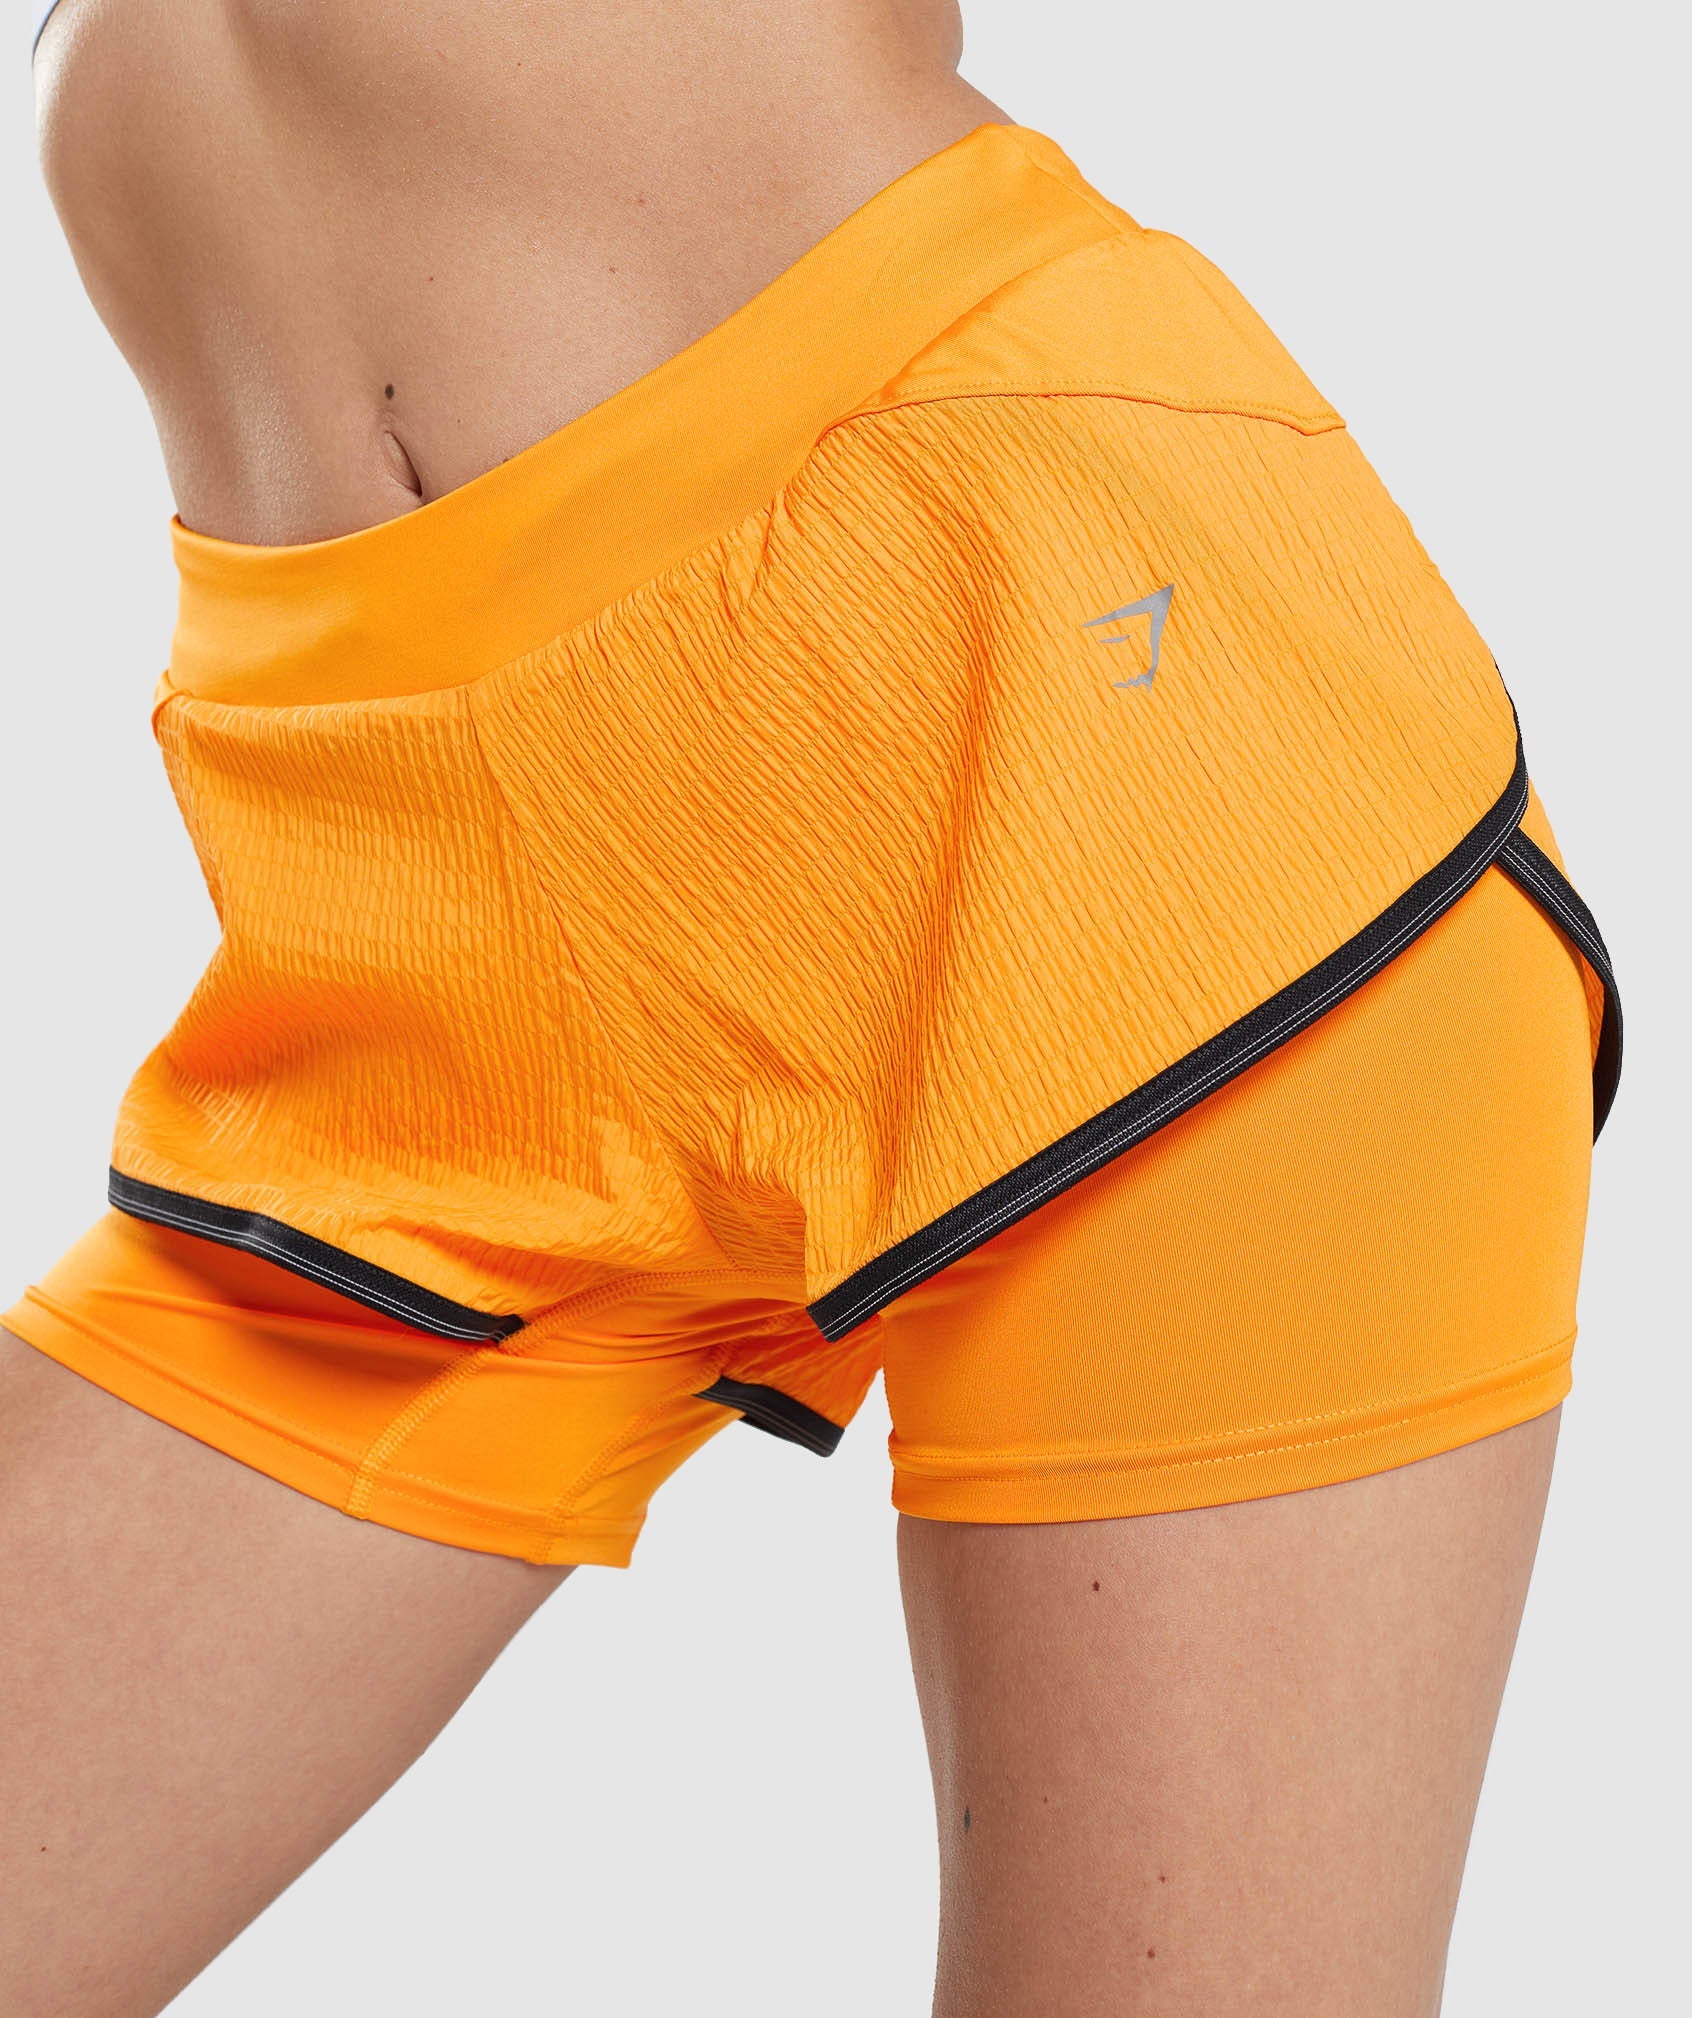 Gymshark Adapt Ombre Seamless Shorts Women's Small NWOT - Orange